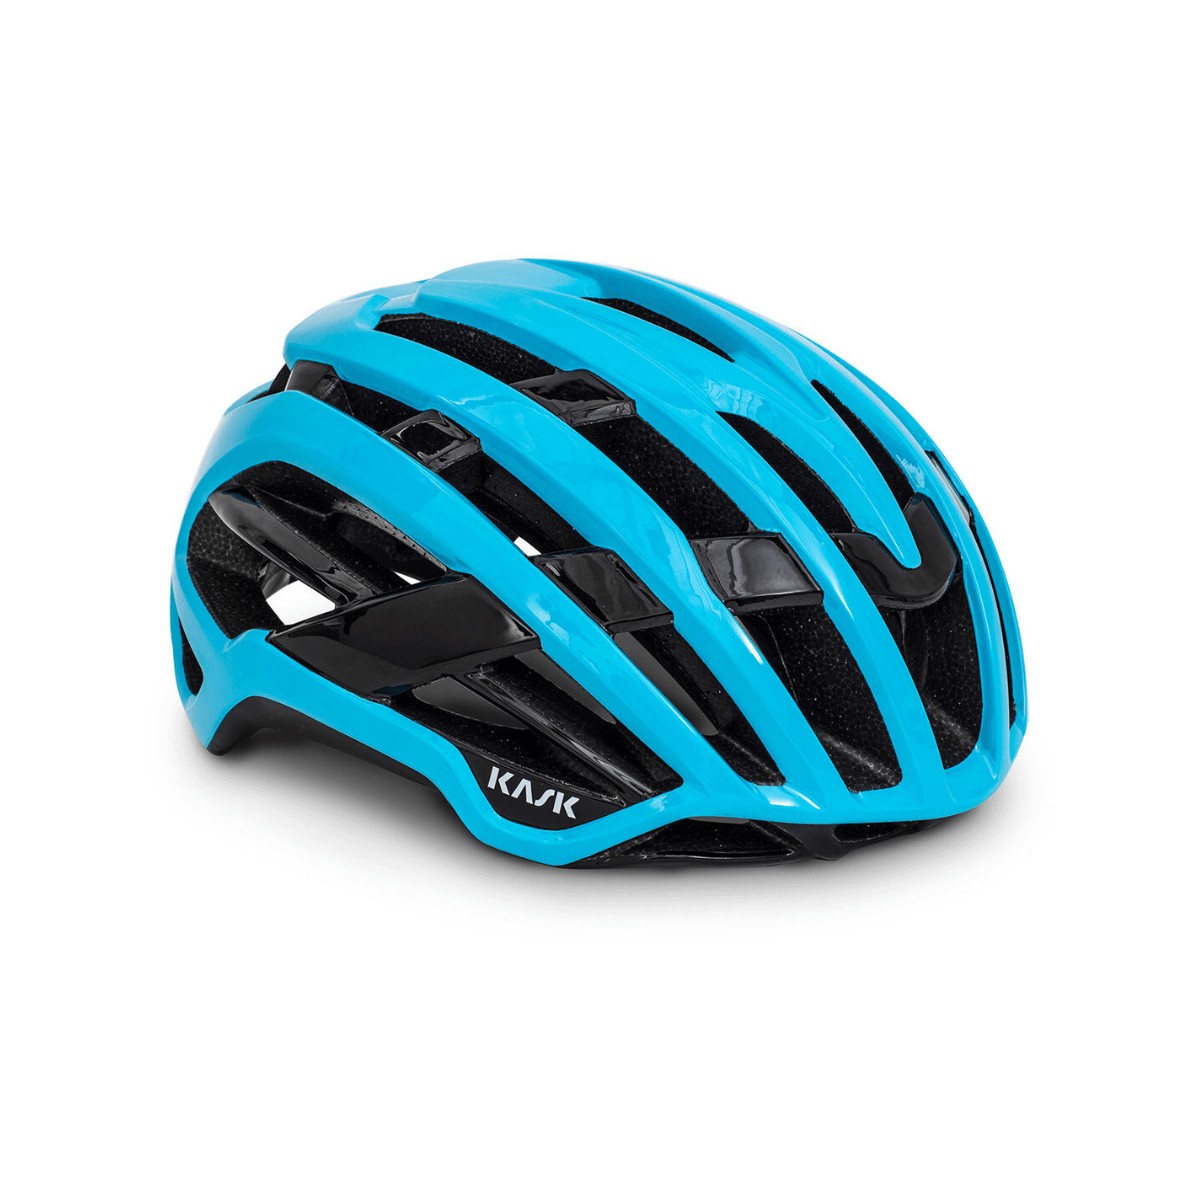 Kask Valegro Blue Helmet, Size L